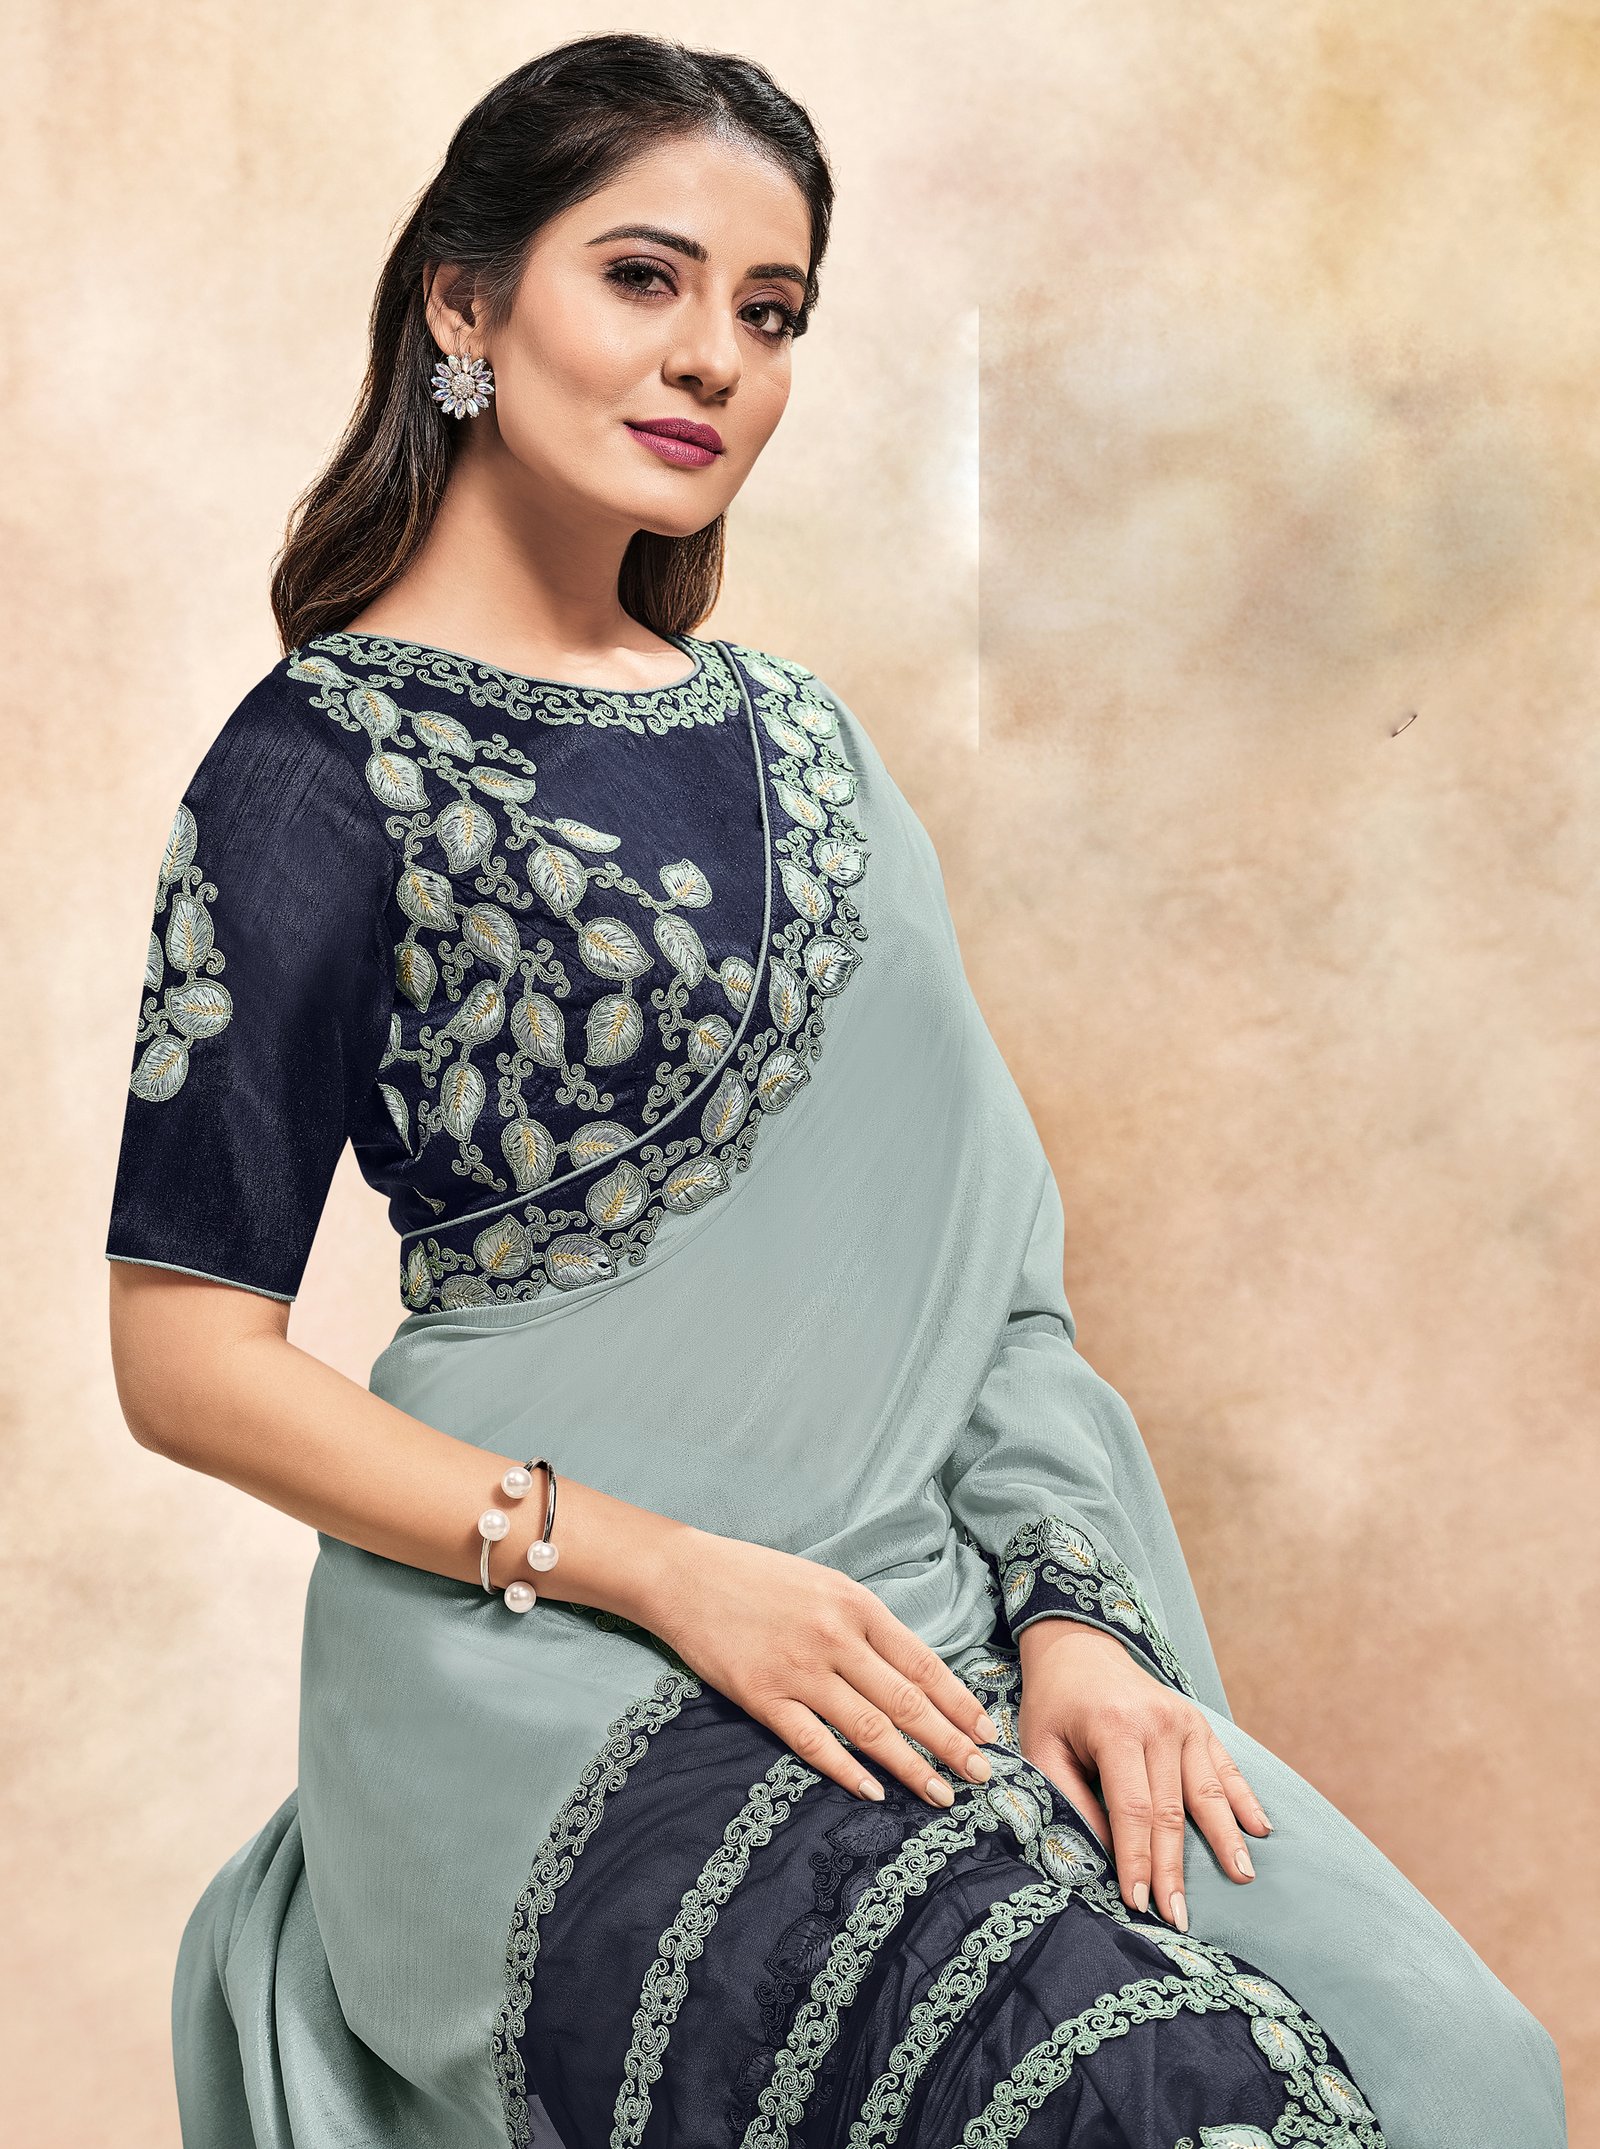 Magenta silk plain saree with designer blouse 5906